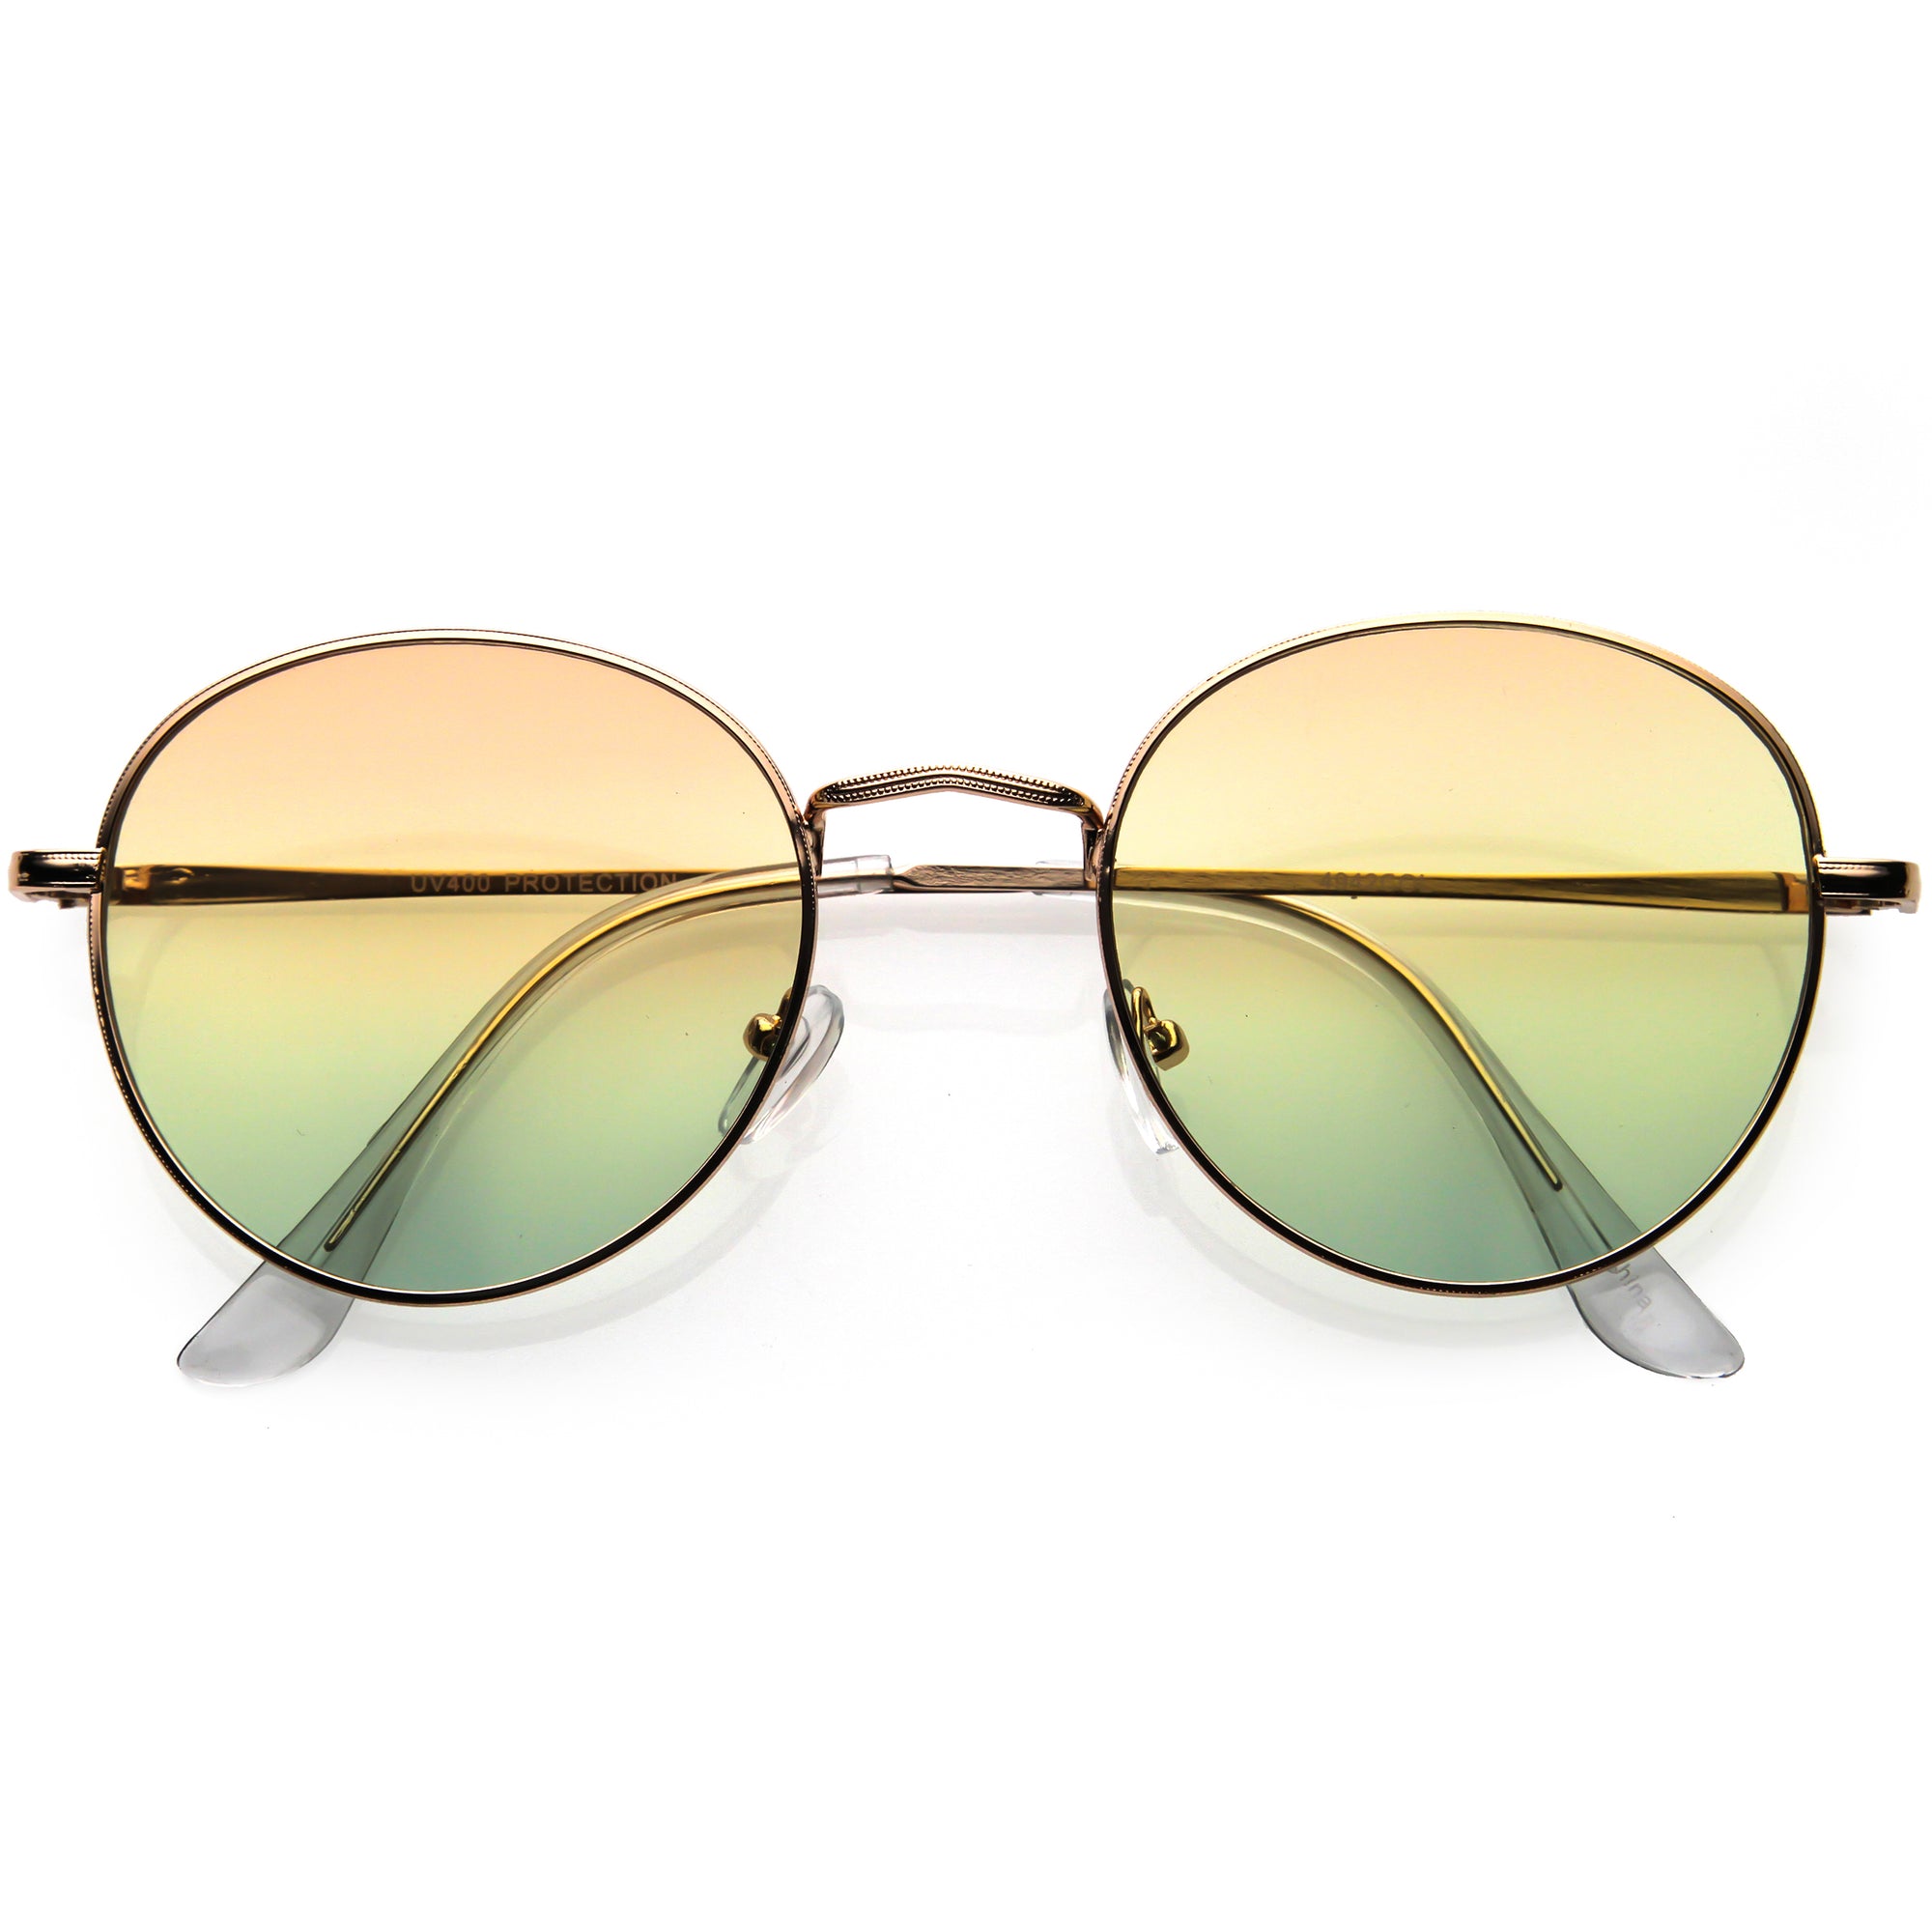 Slim Metal Gradient Colored Lens Round Sunglasses D119